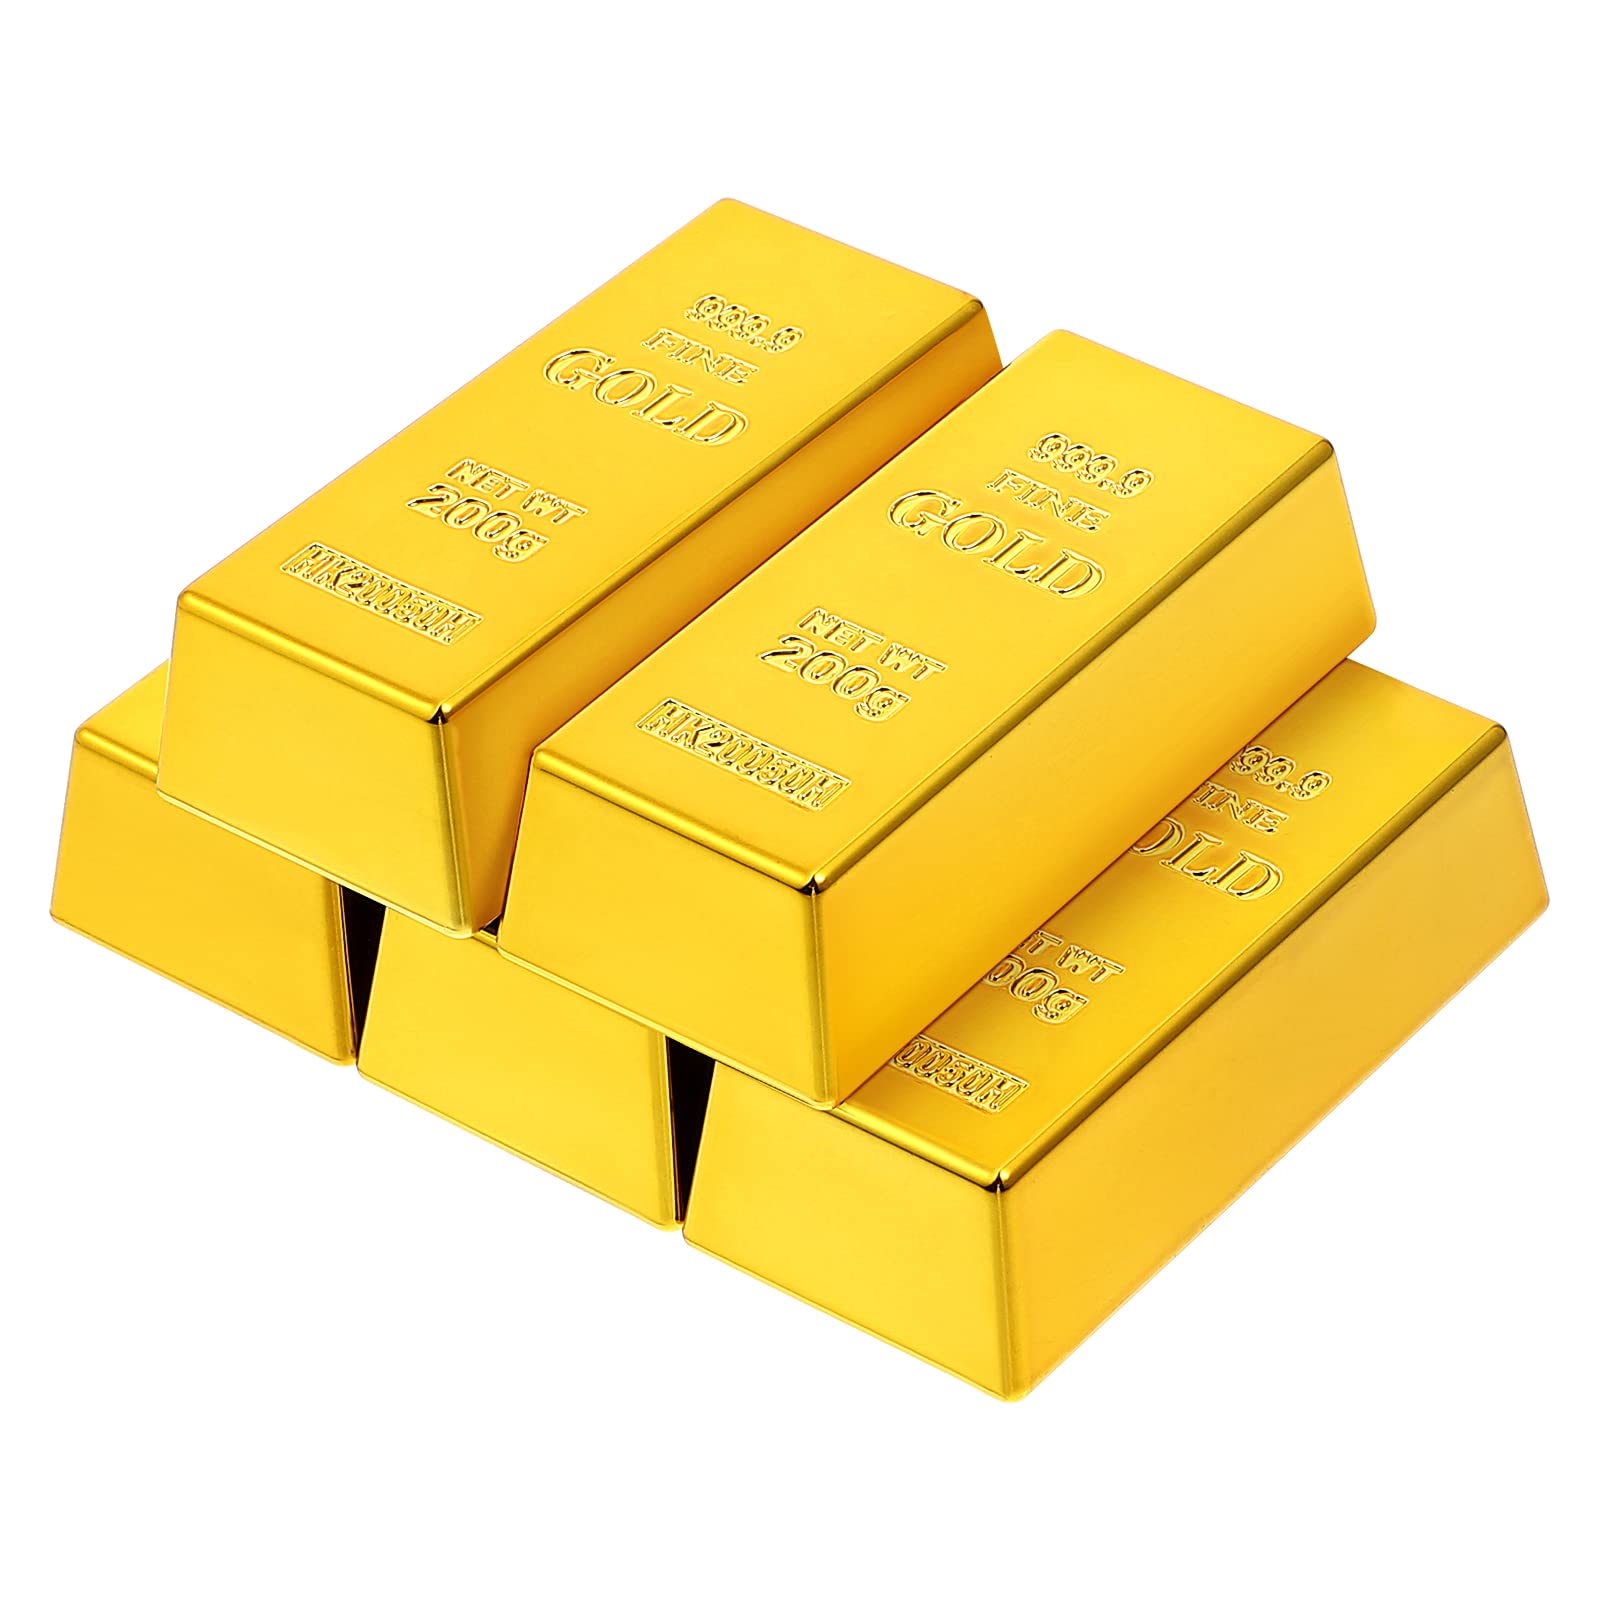 Golden bar or gold bullion